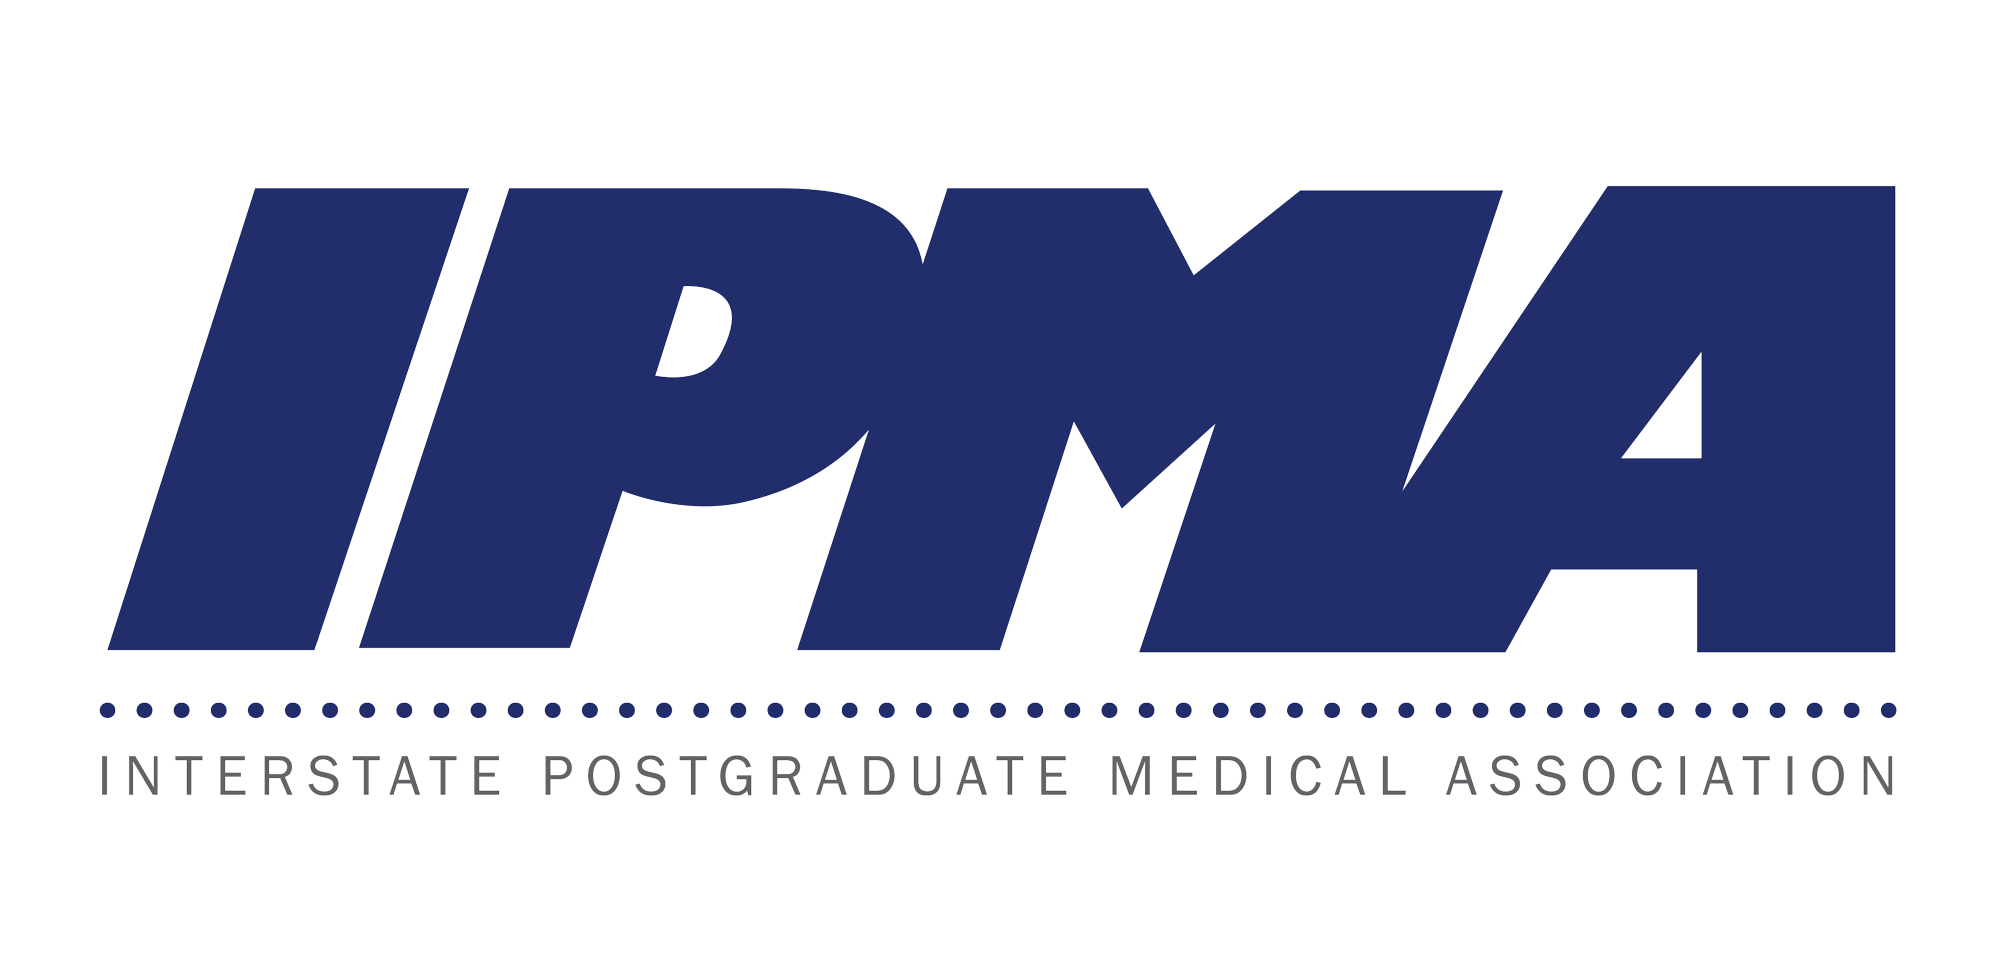 Interstate Postgraduate Medical Association logo